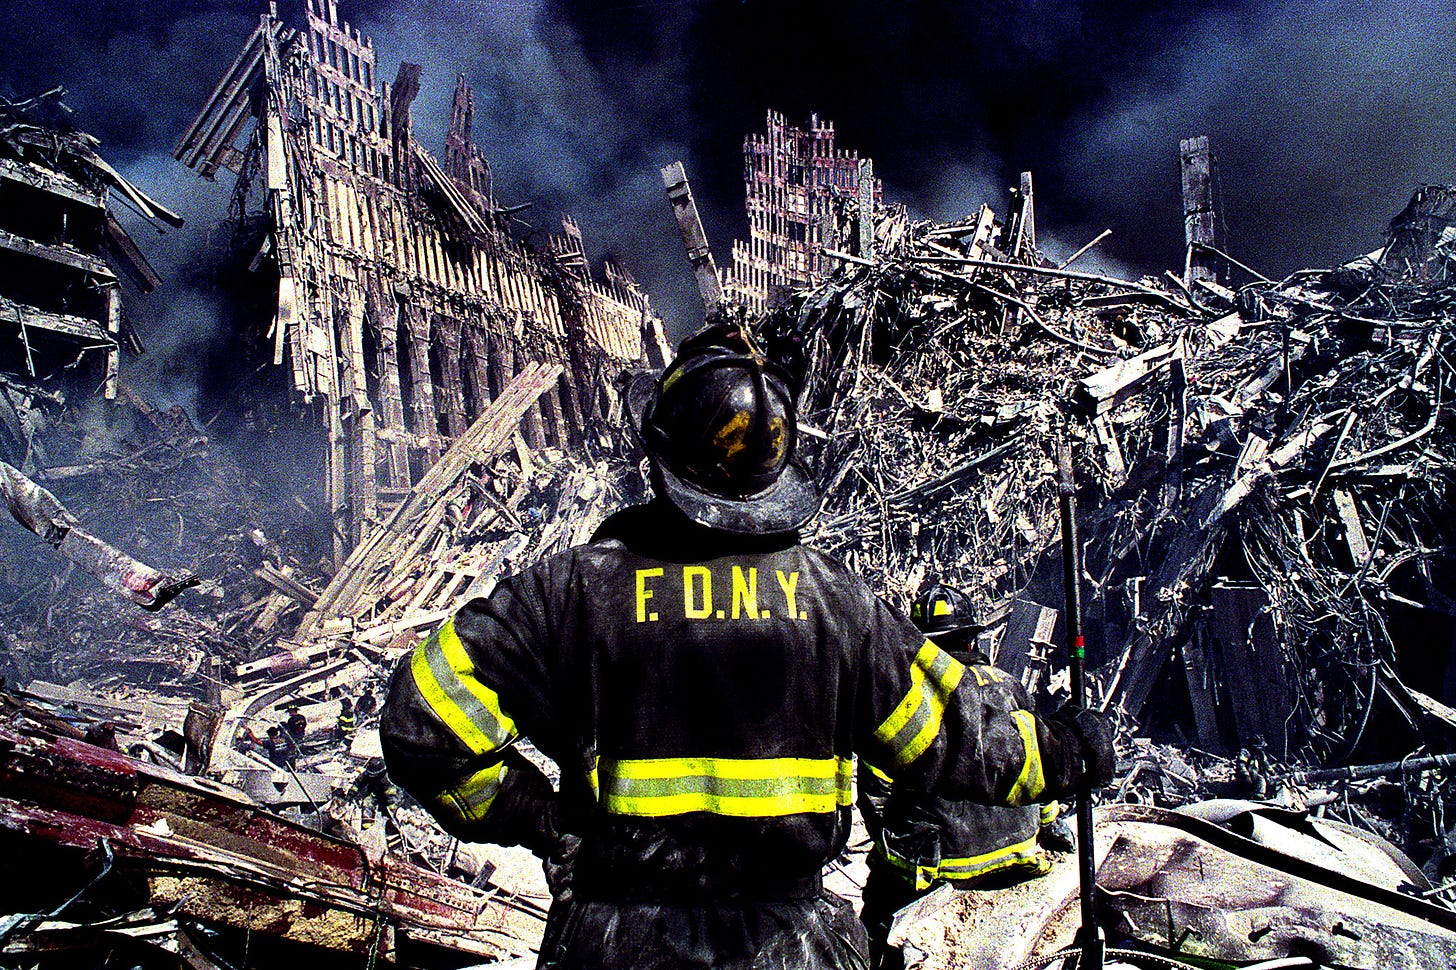 9/11 icon by Matthew McDermott